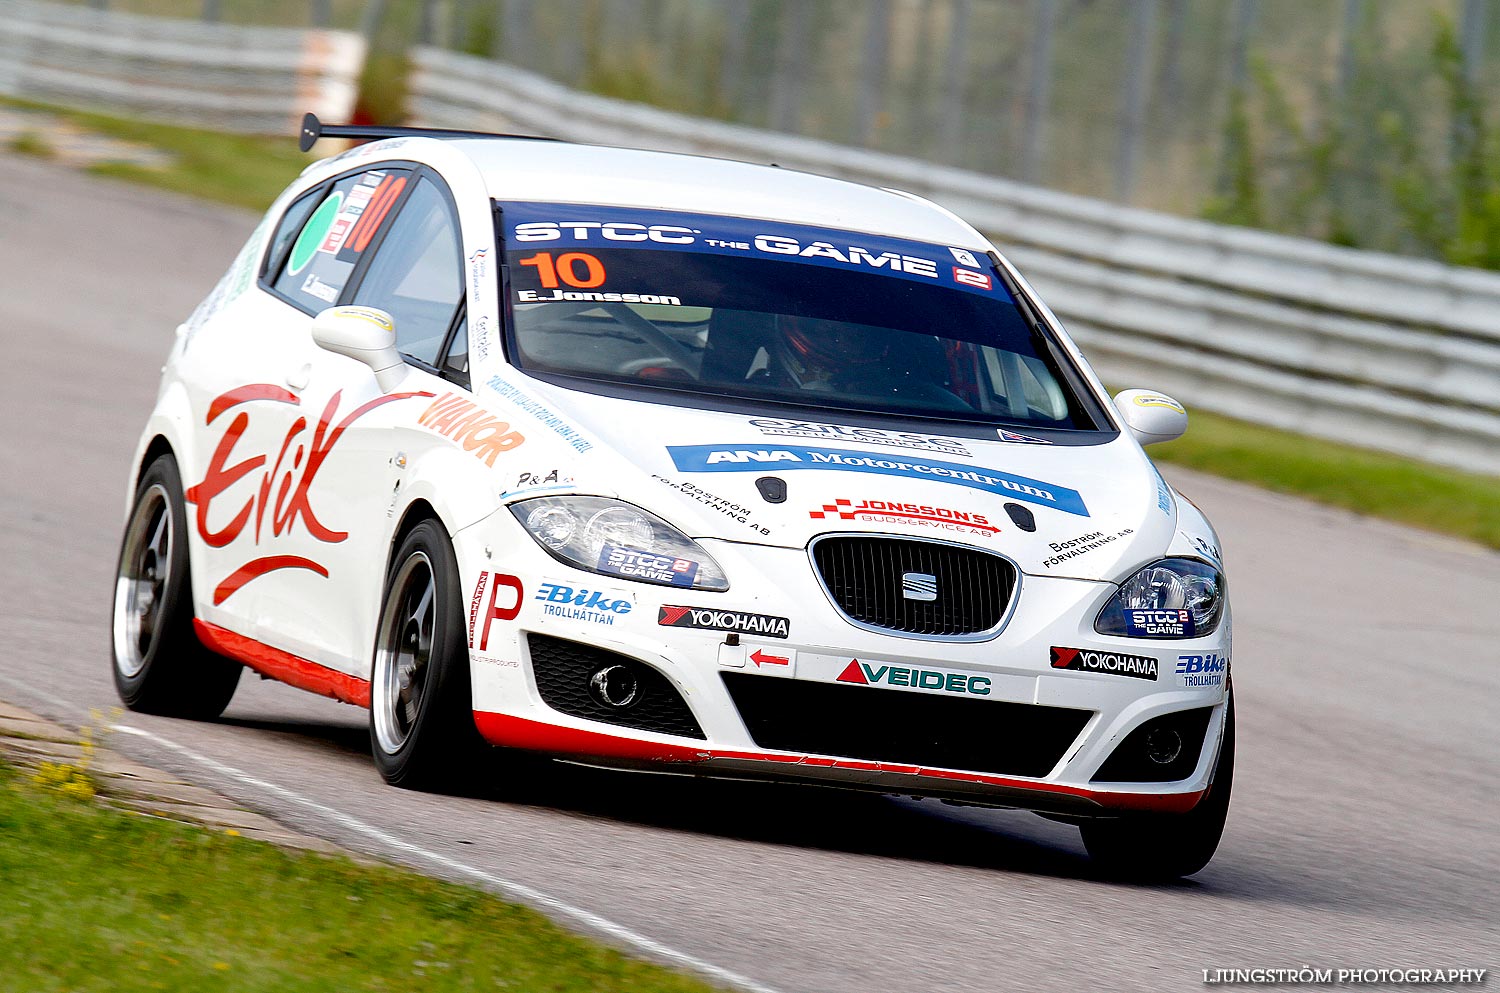 SSK Raceweek,mix,Kinnekulle Ring,Götene,Sverige,Motorsport,,2011,44489